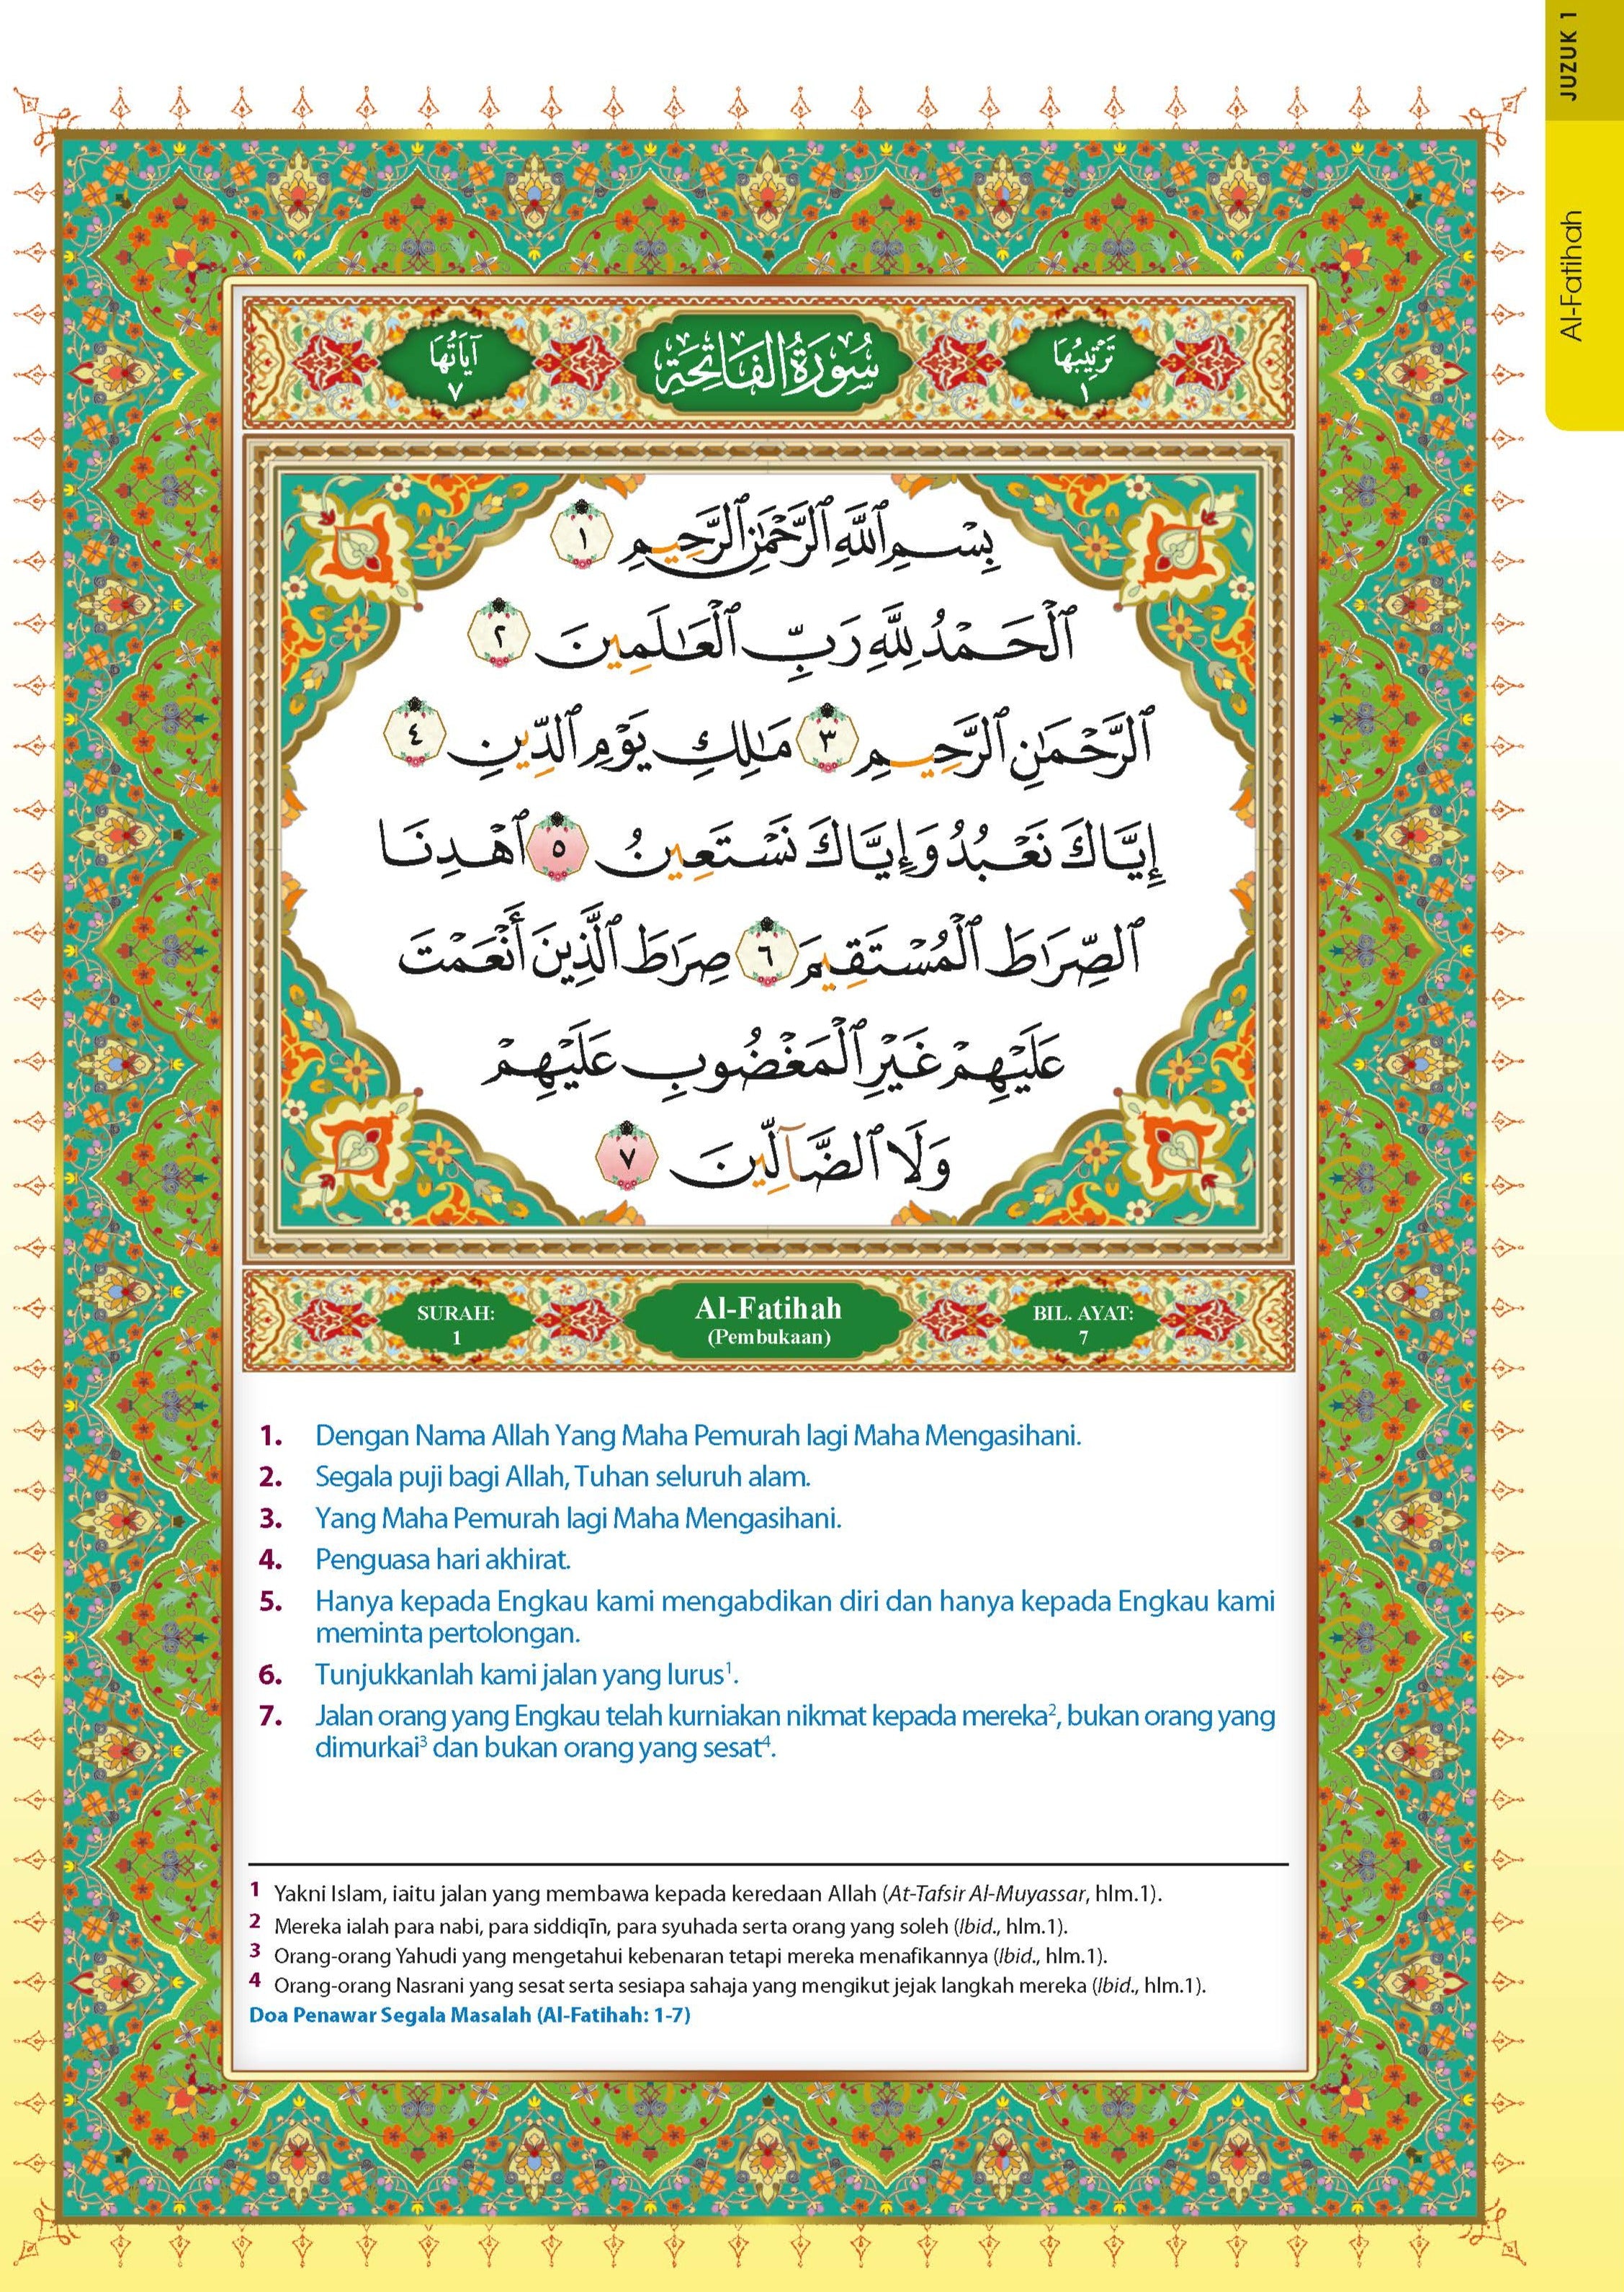 Al-Quran Al-Karim Tajwid & Terjemahan Qiyam Berserta Panduan Waqaf dan Ibtida - (TBAQ1045)